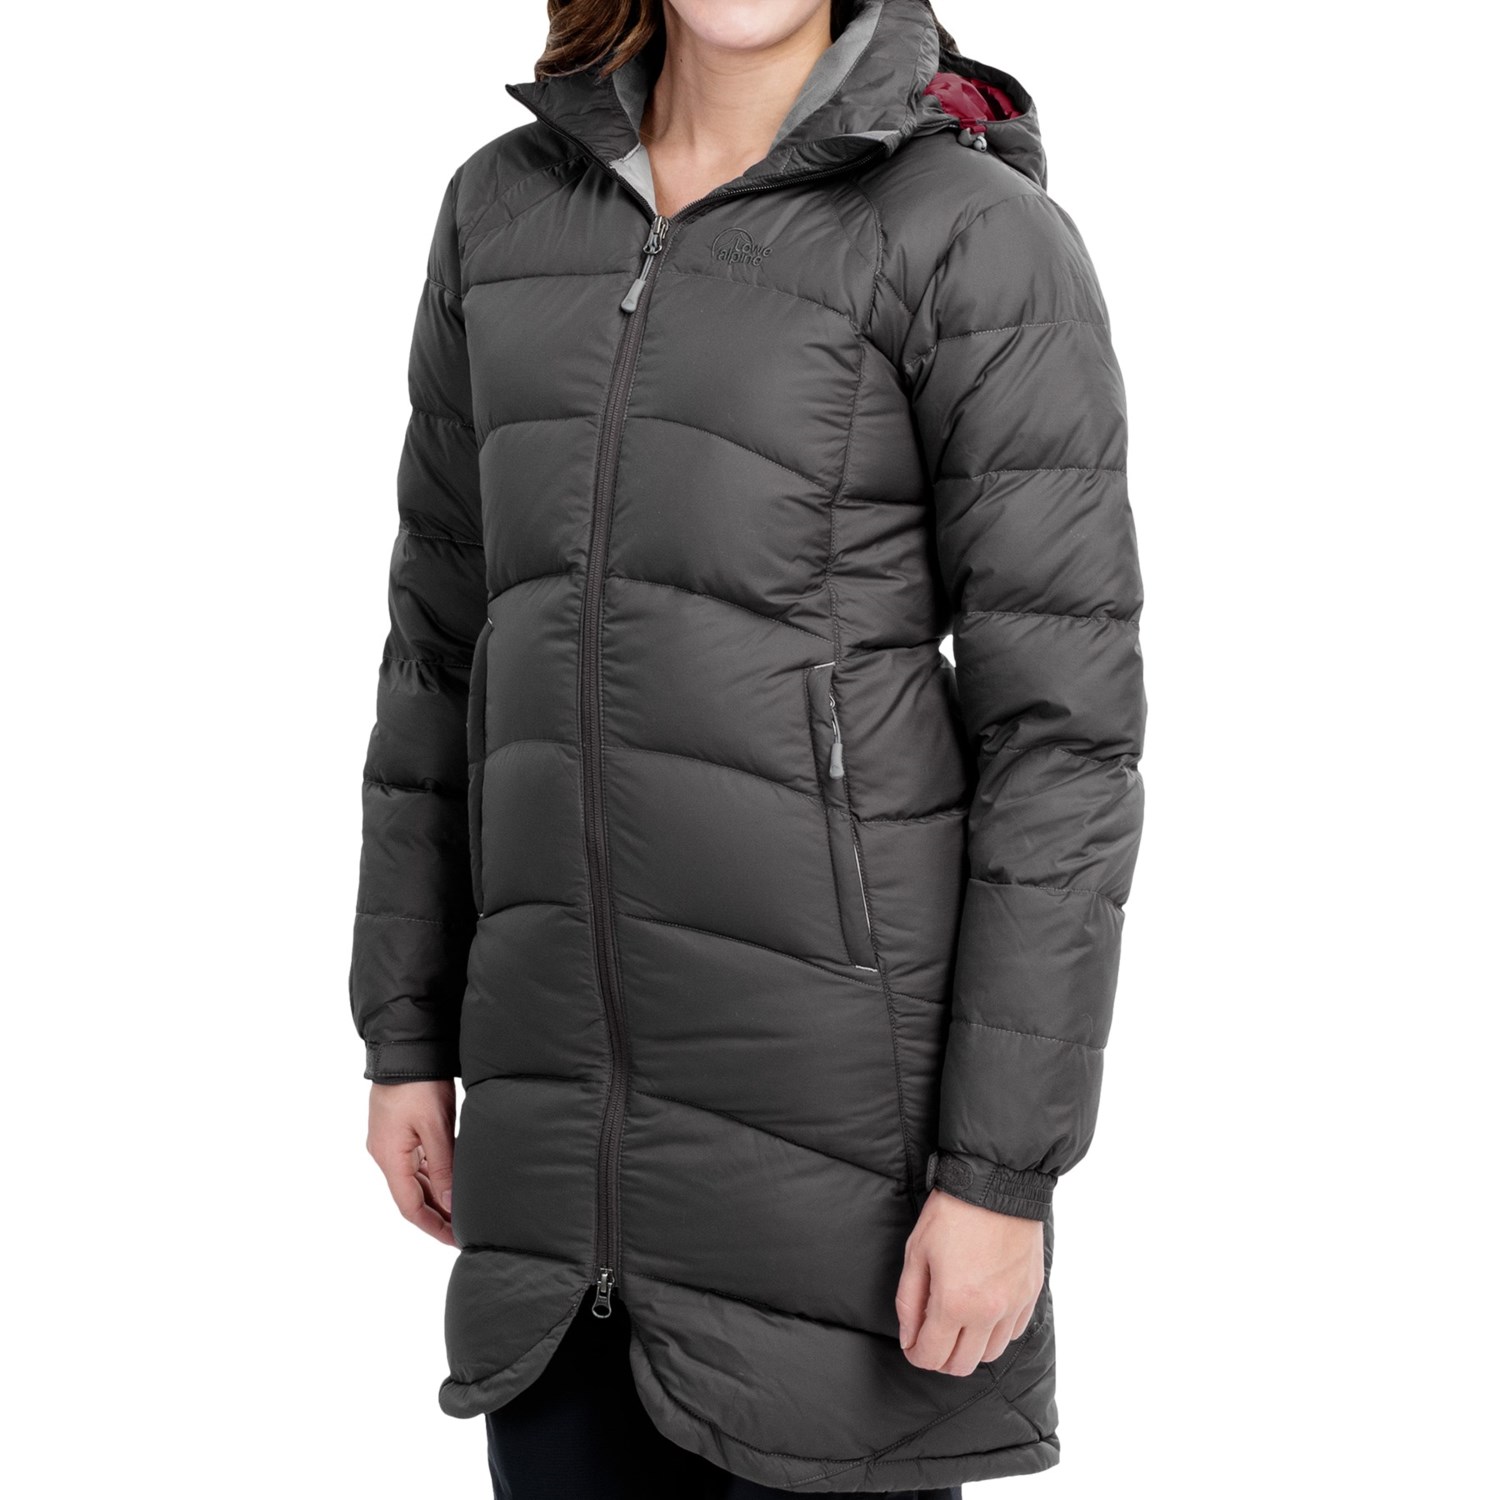 Lowe Alpine Firefrost Down Jacket (For Women) - Save 44%